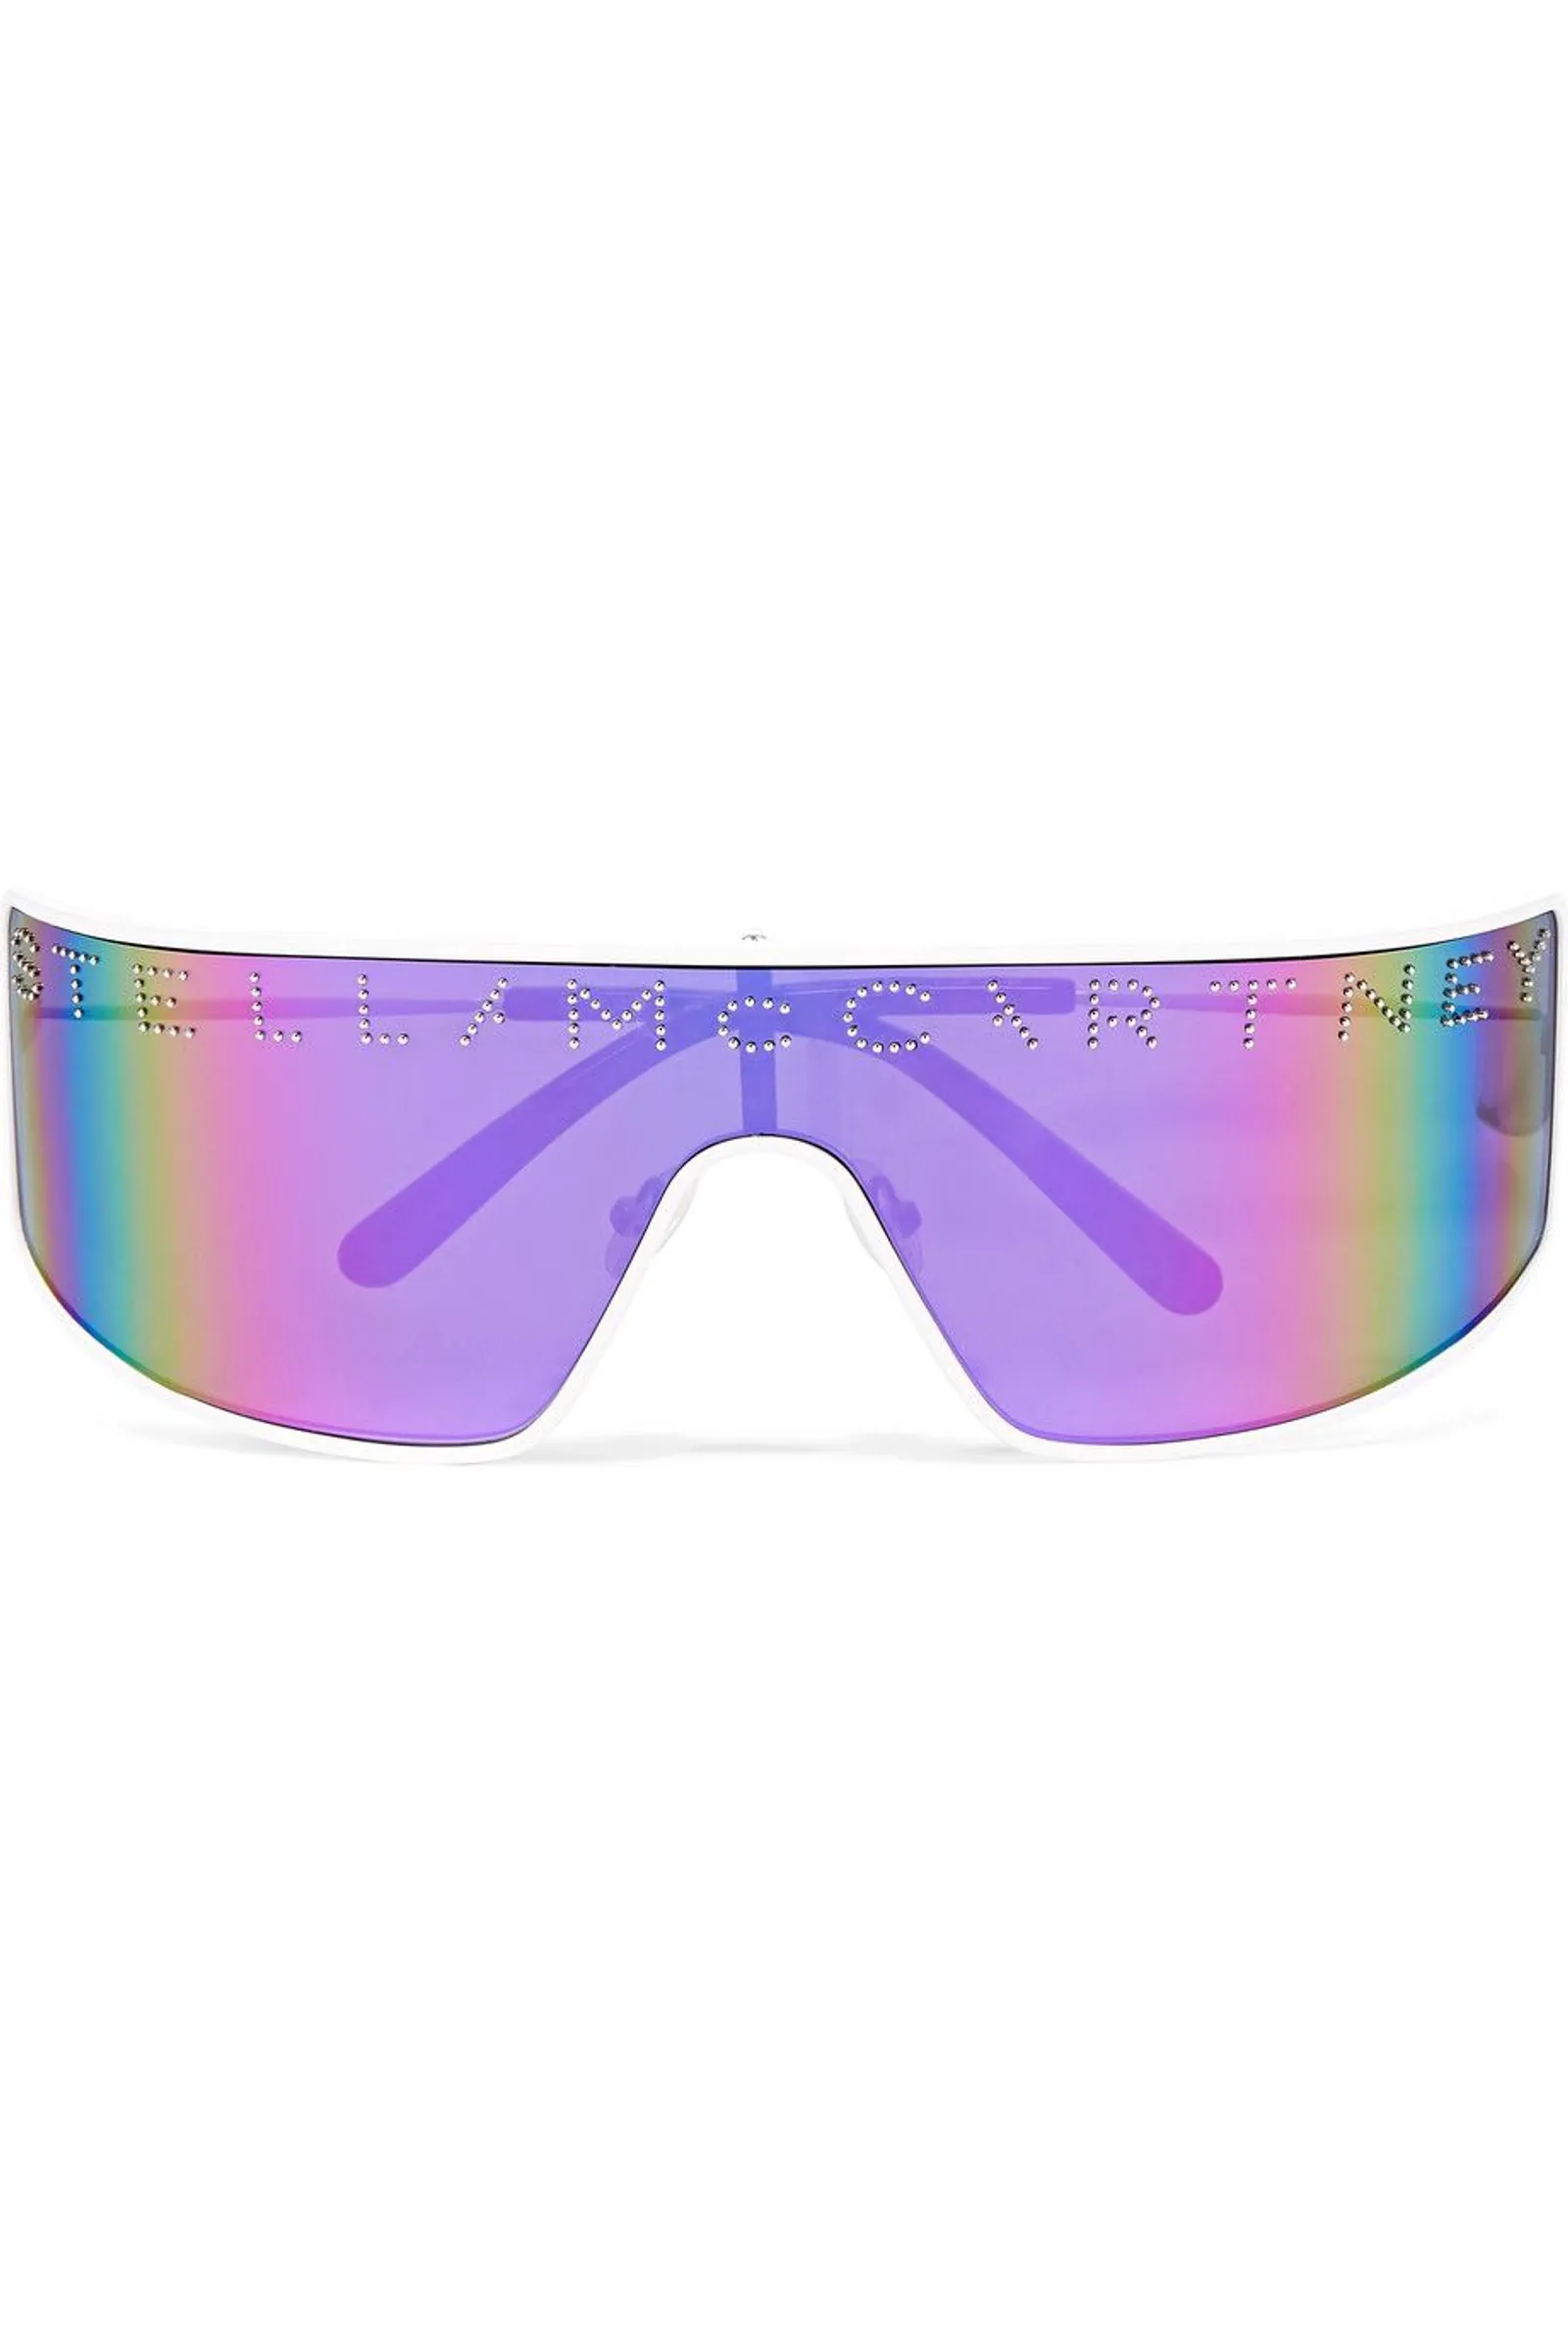 #PopbelaOOTD: Model Kacamata Shield